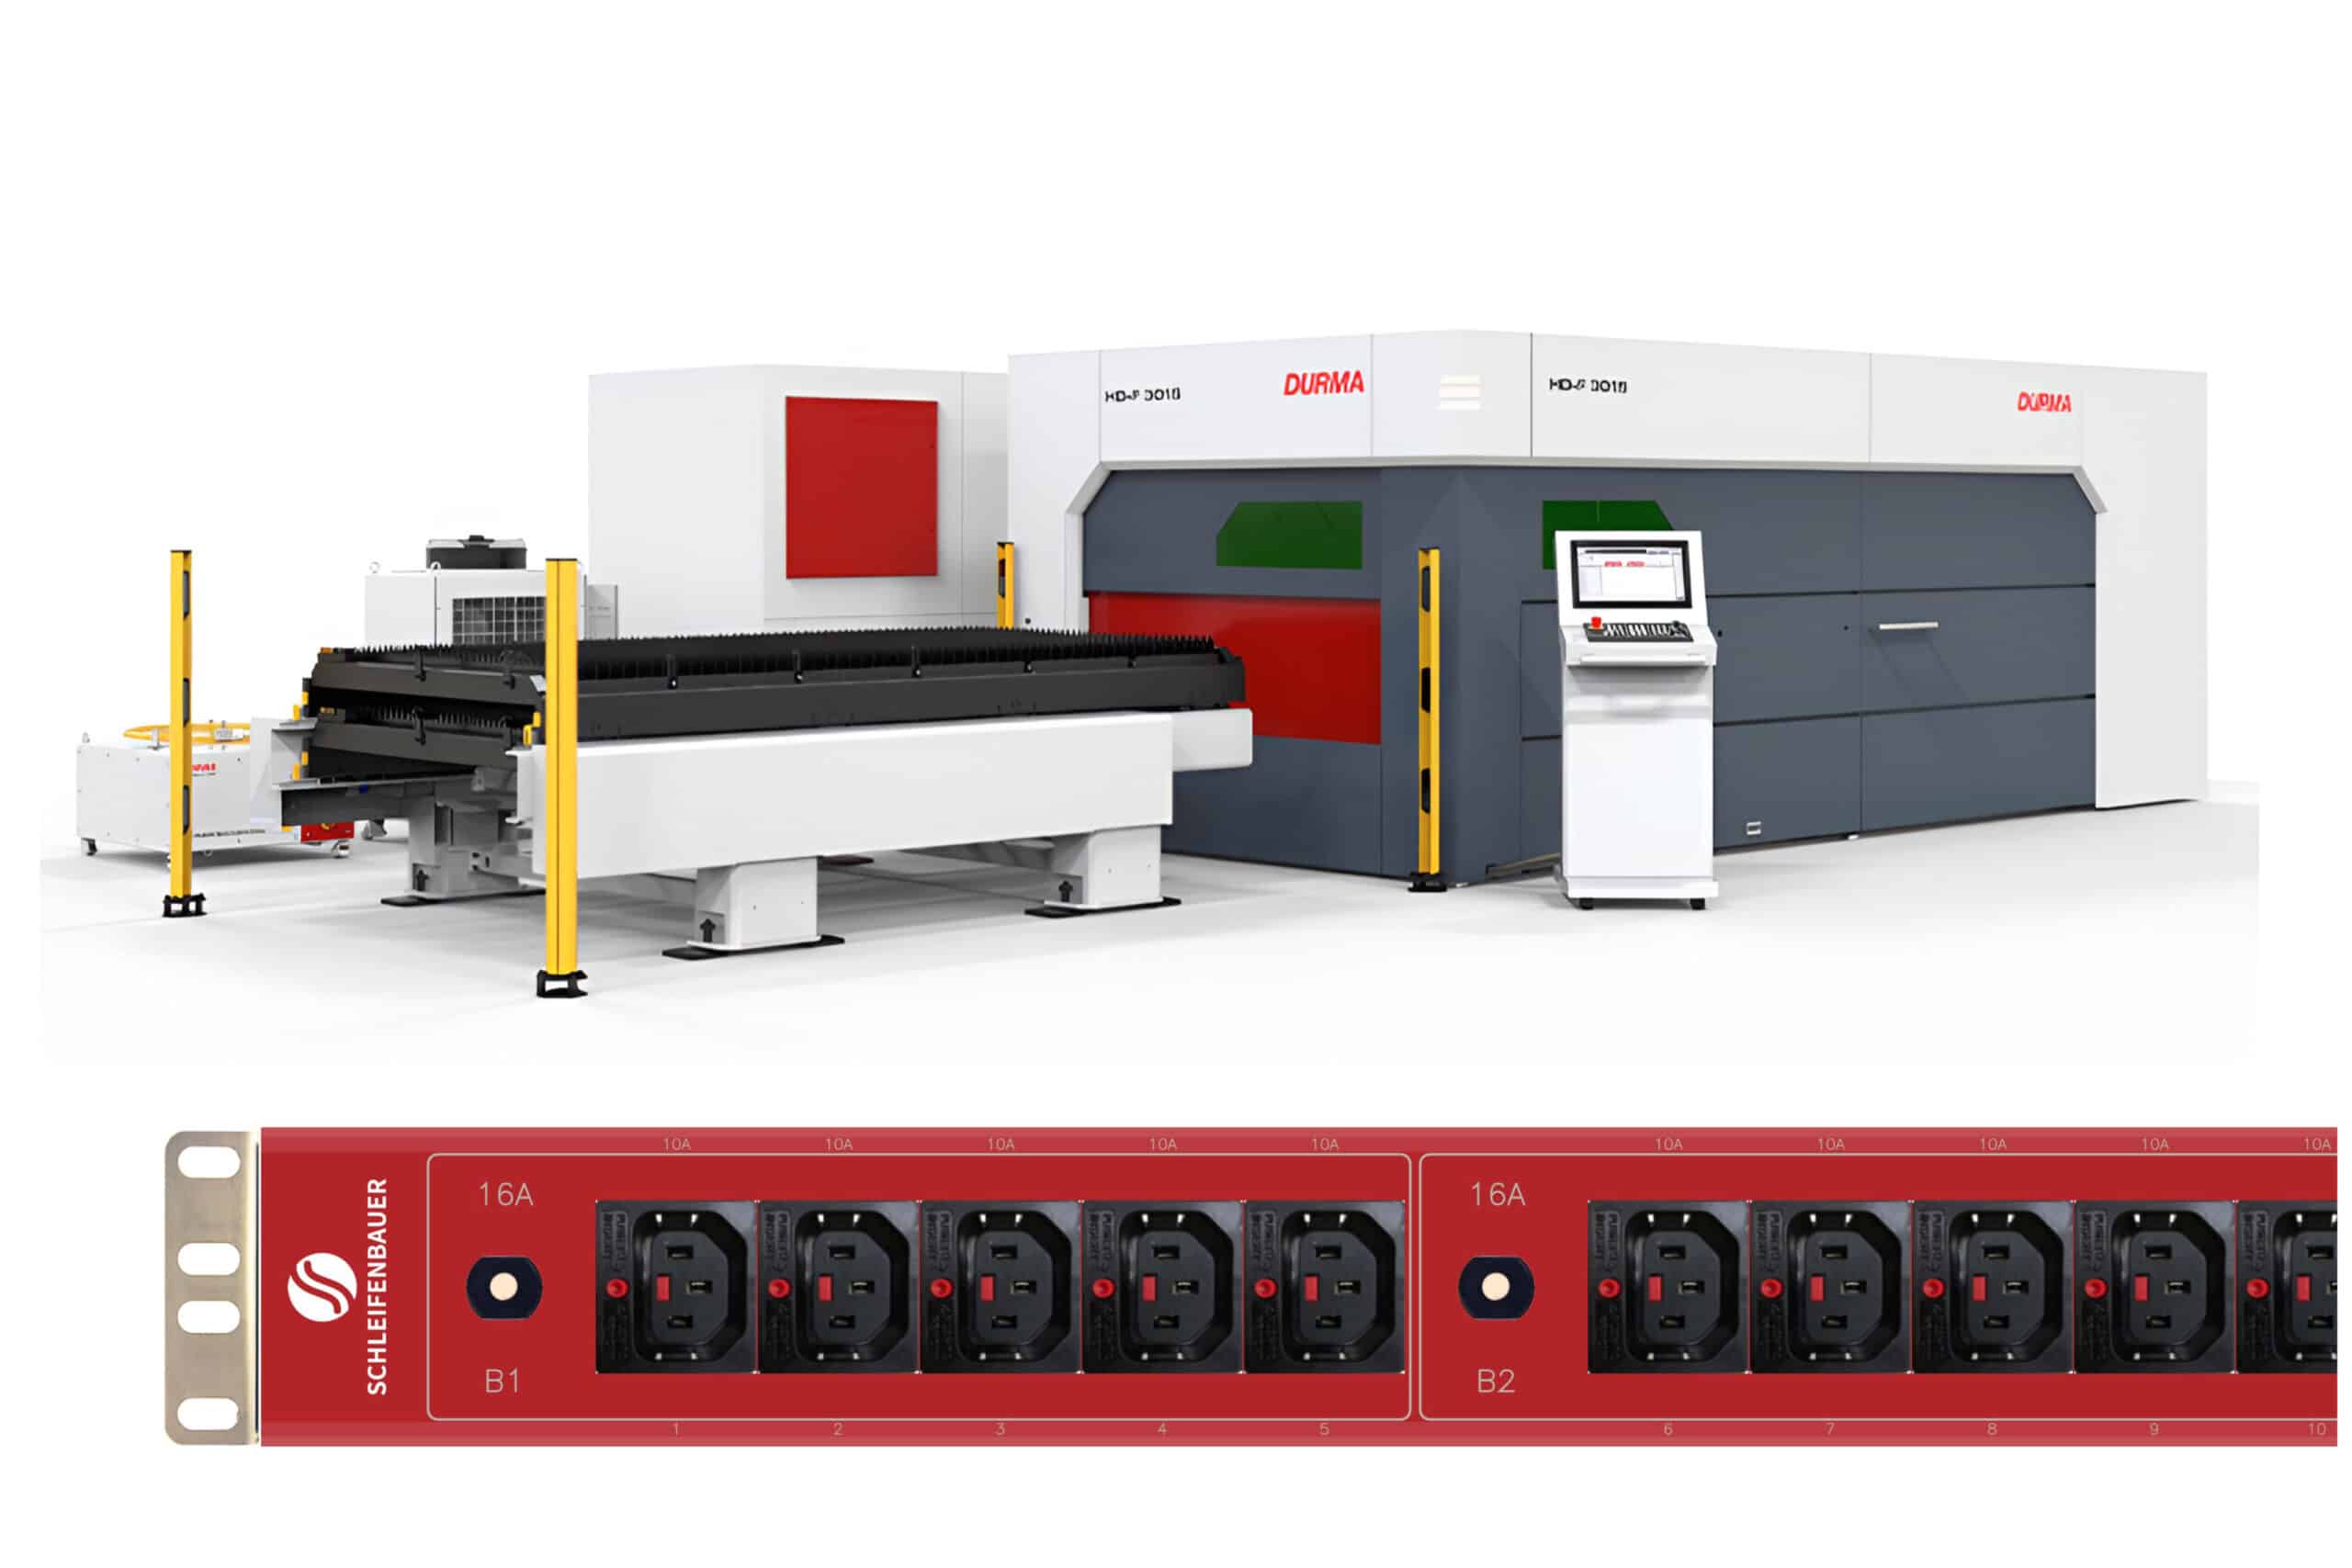 Schleifenbauer acquires new fibre laser machine to increase production